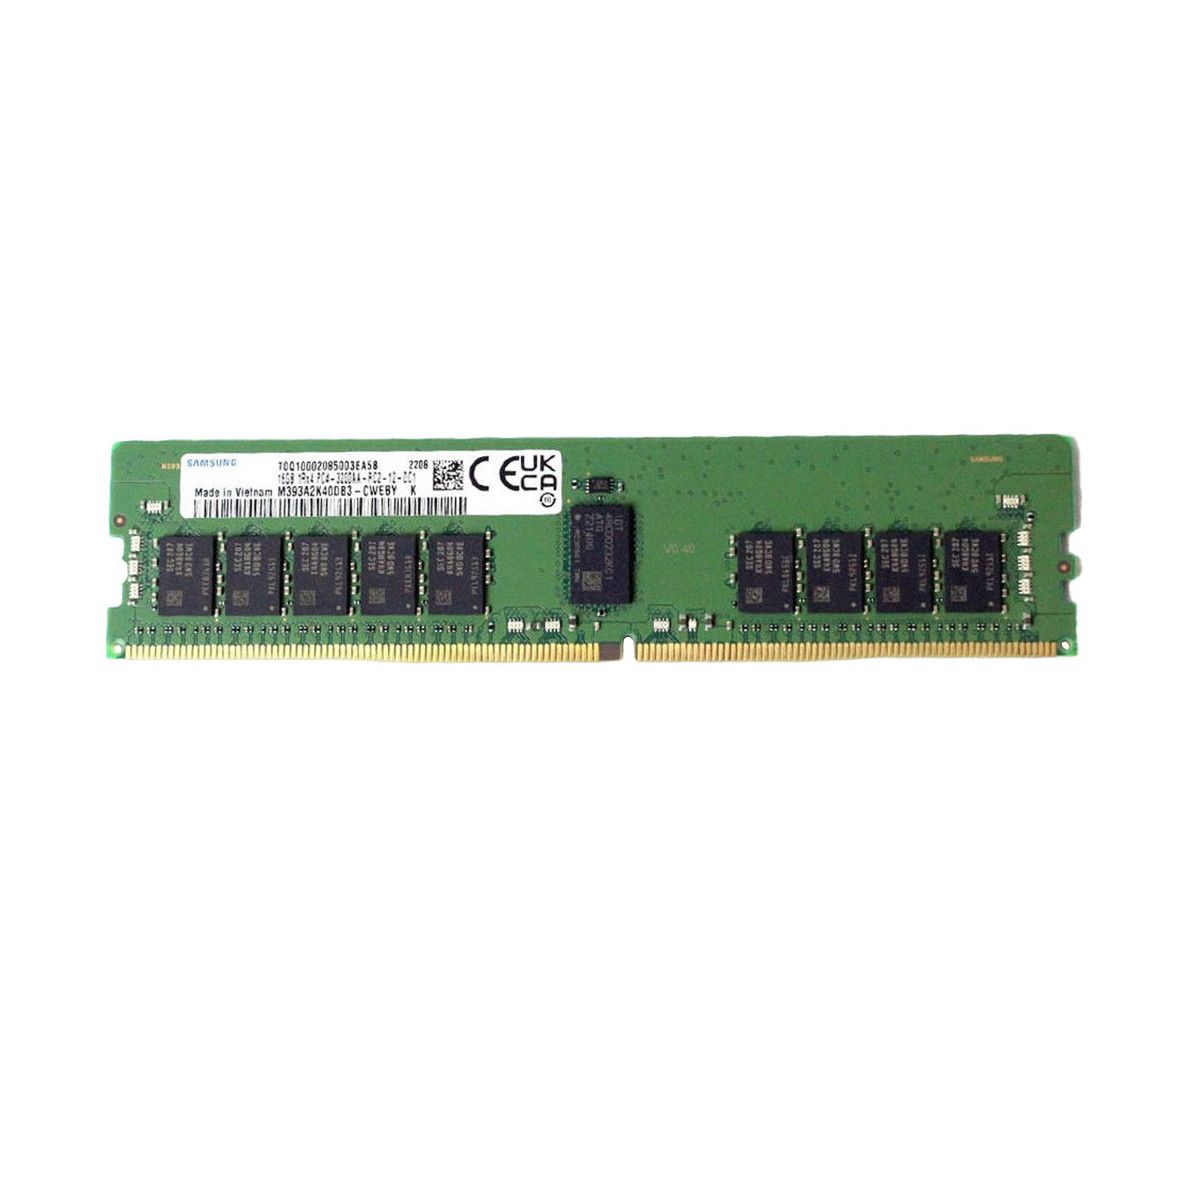 UCSX-MR-X16G1RW-MS- Memstar 1x 16GB DDR4-3200 RDIMM PC4-25600R - Memorie OEM compatibilă Mem-Star 1 - Memstar 